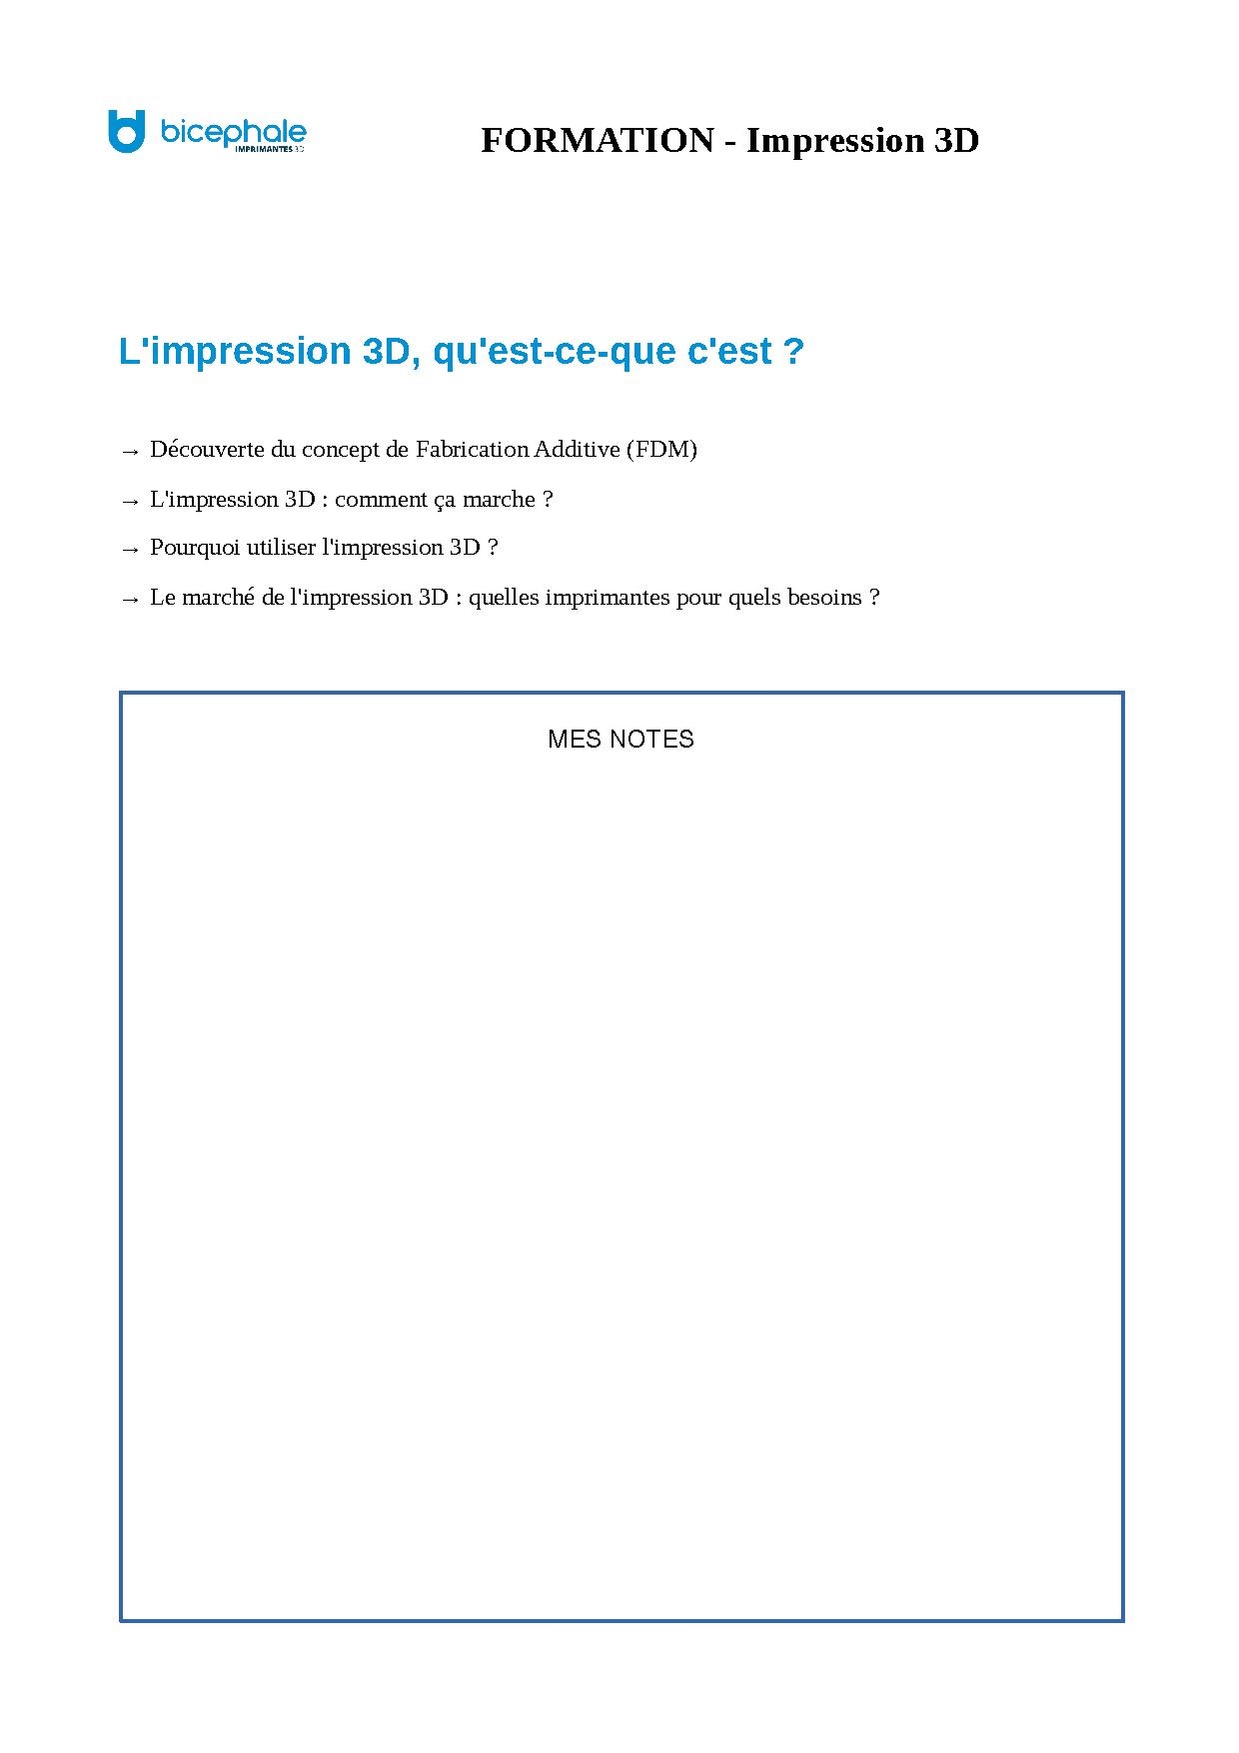 Formation Impression Memo.pdf